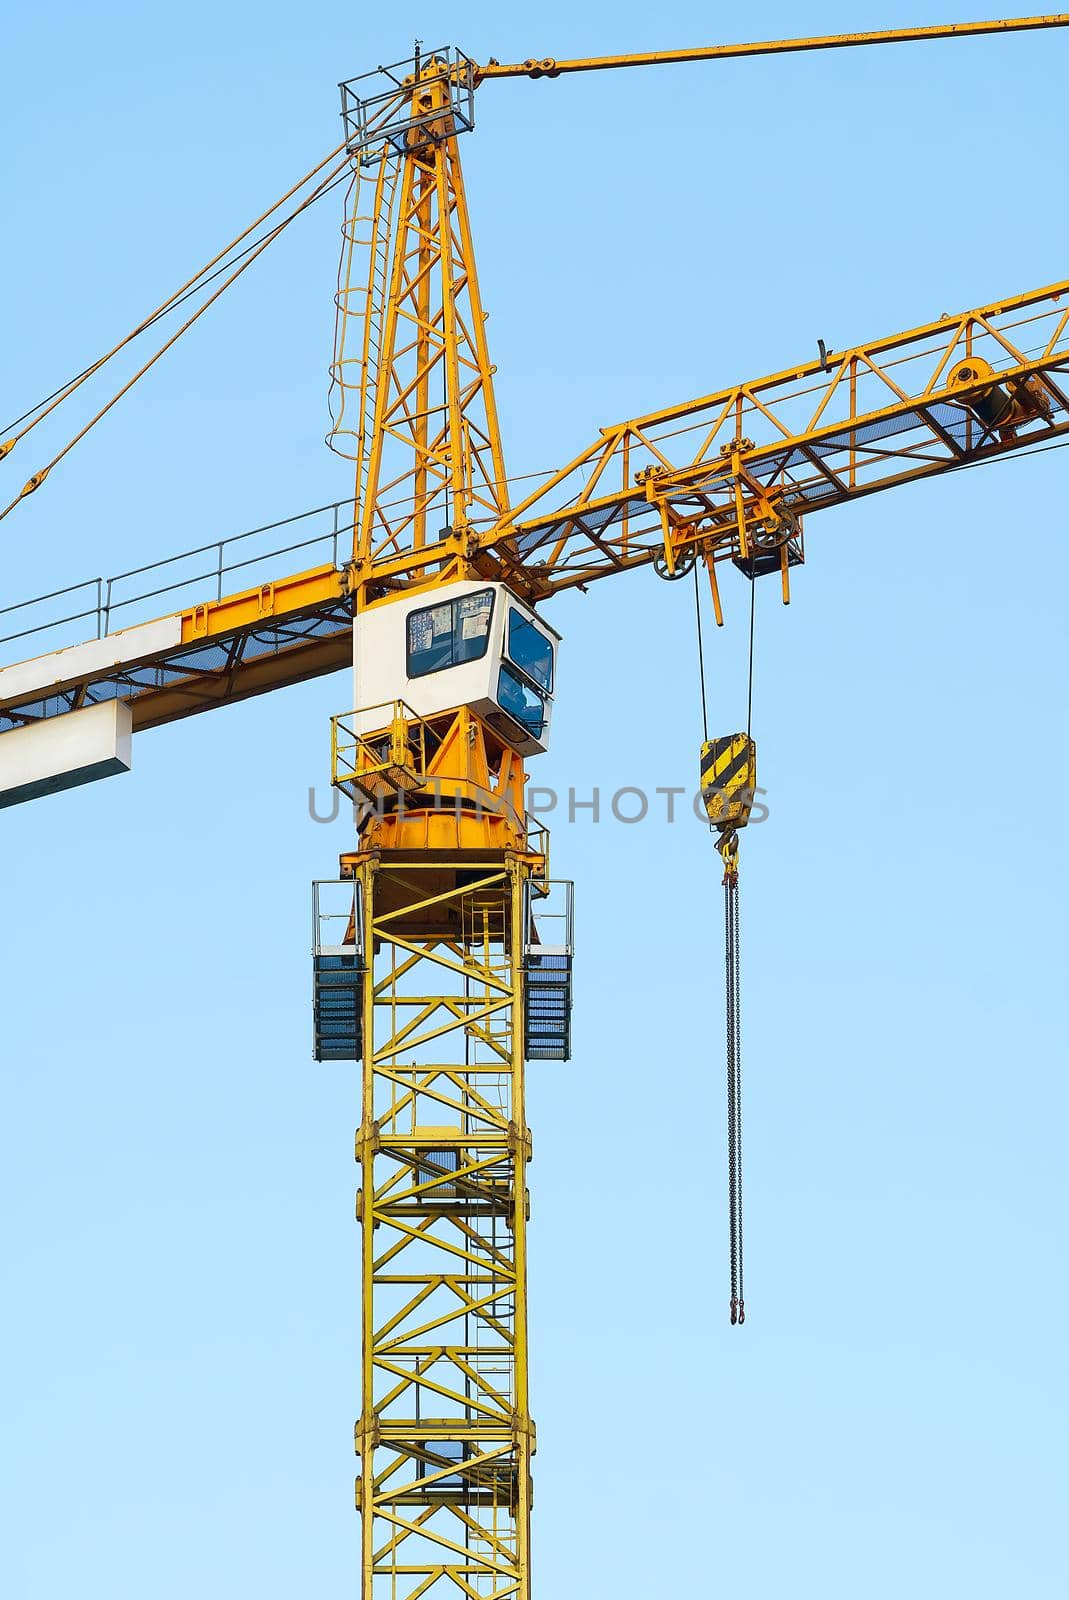 Construction tower crane on blue sky background. Yellow tower crane. Industrial construction crane. Tower cranes against blue sky.